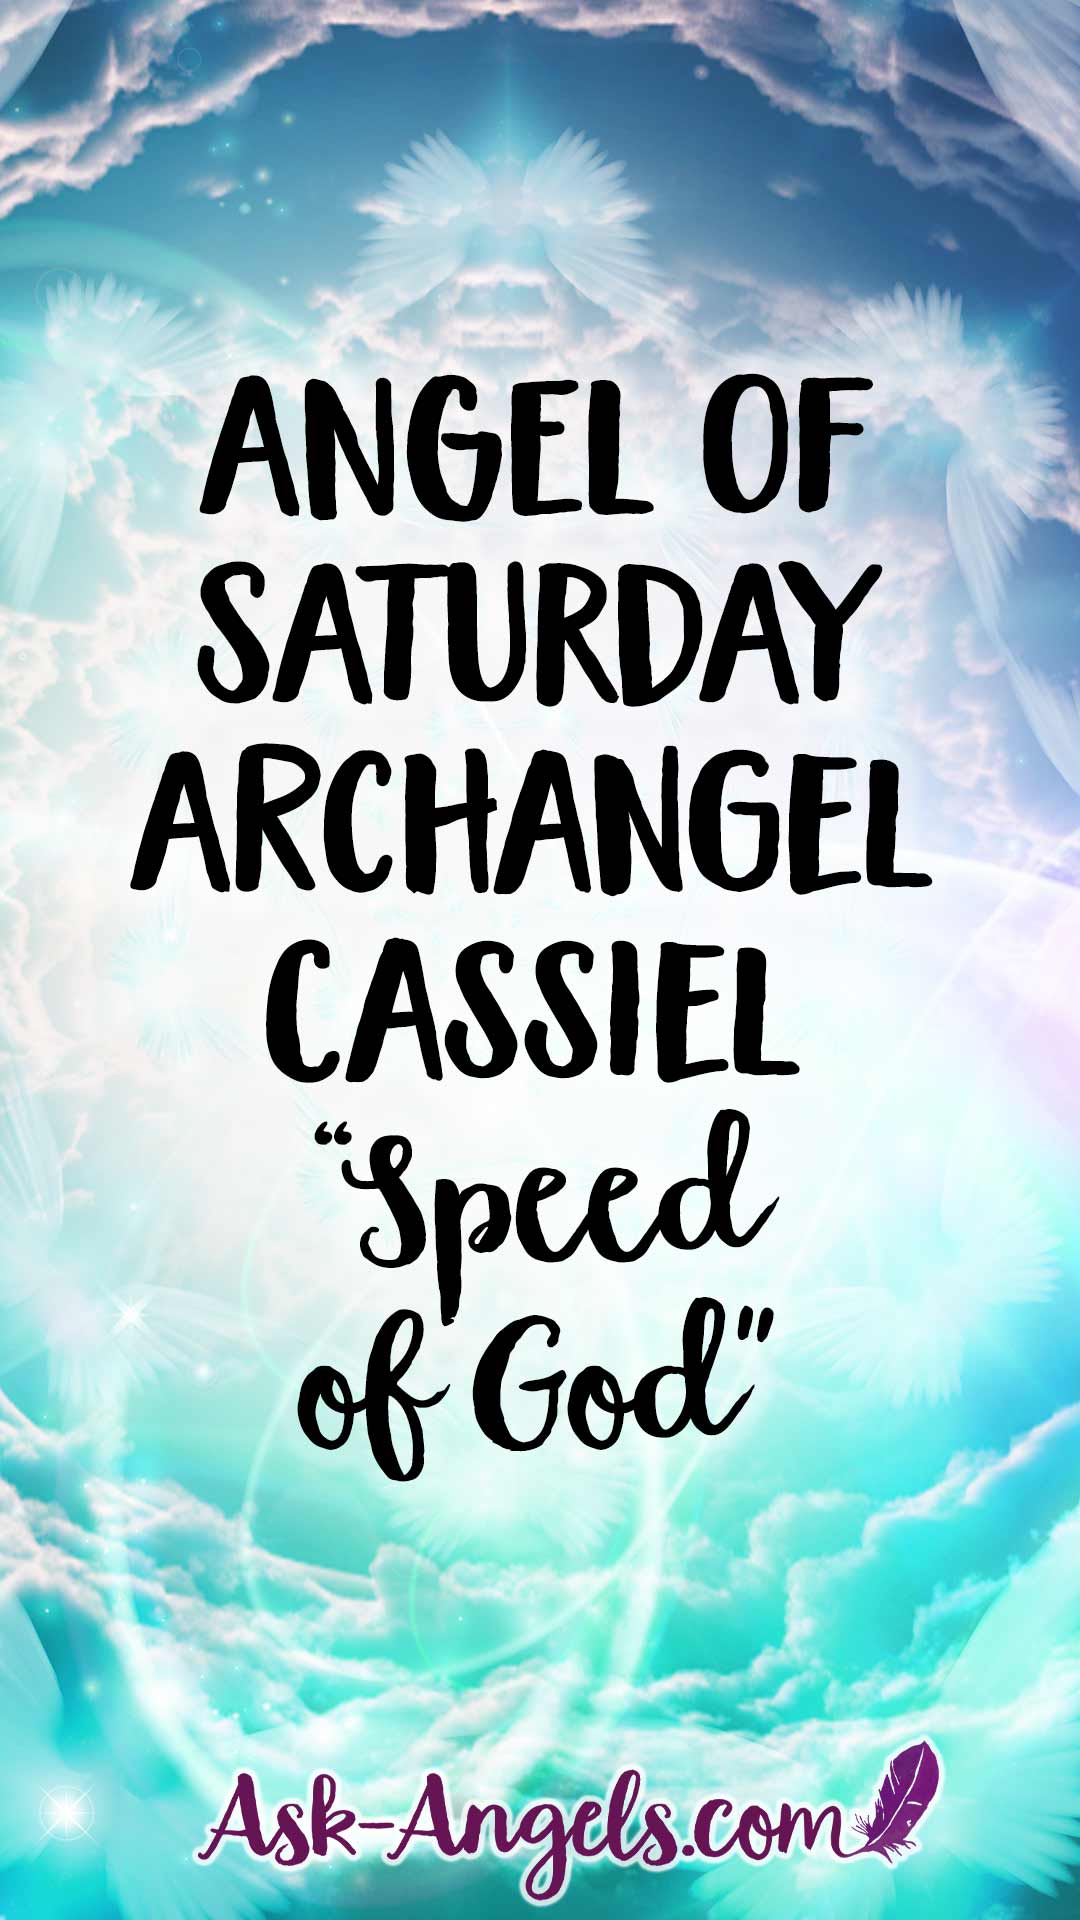 Archangel Cassiel - Archangel of Saturday - Speed of God